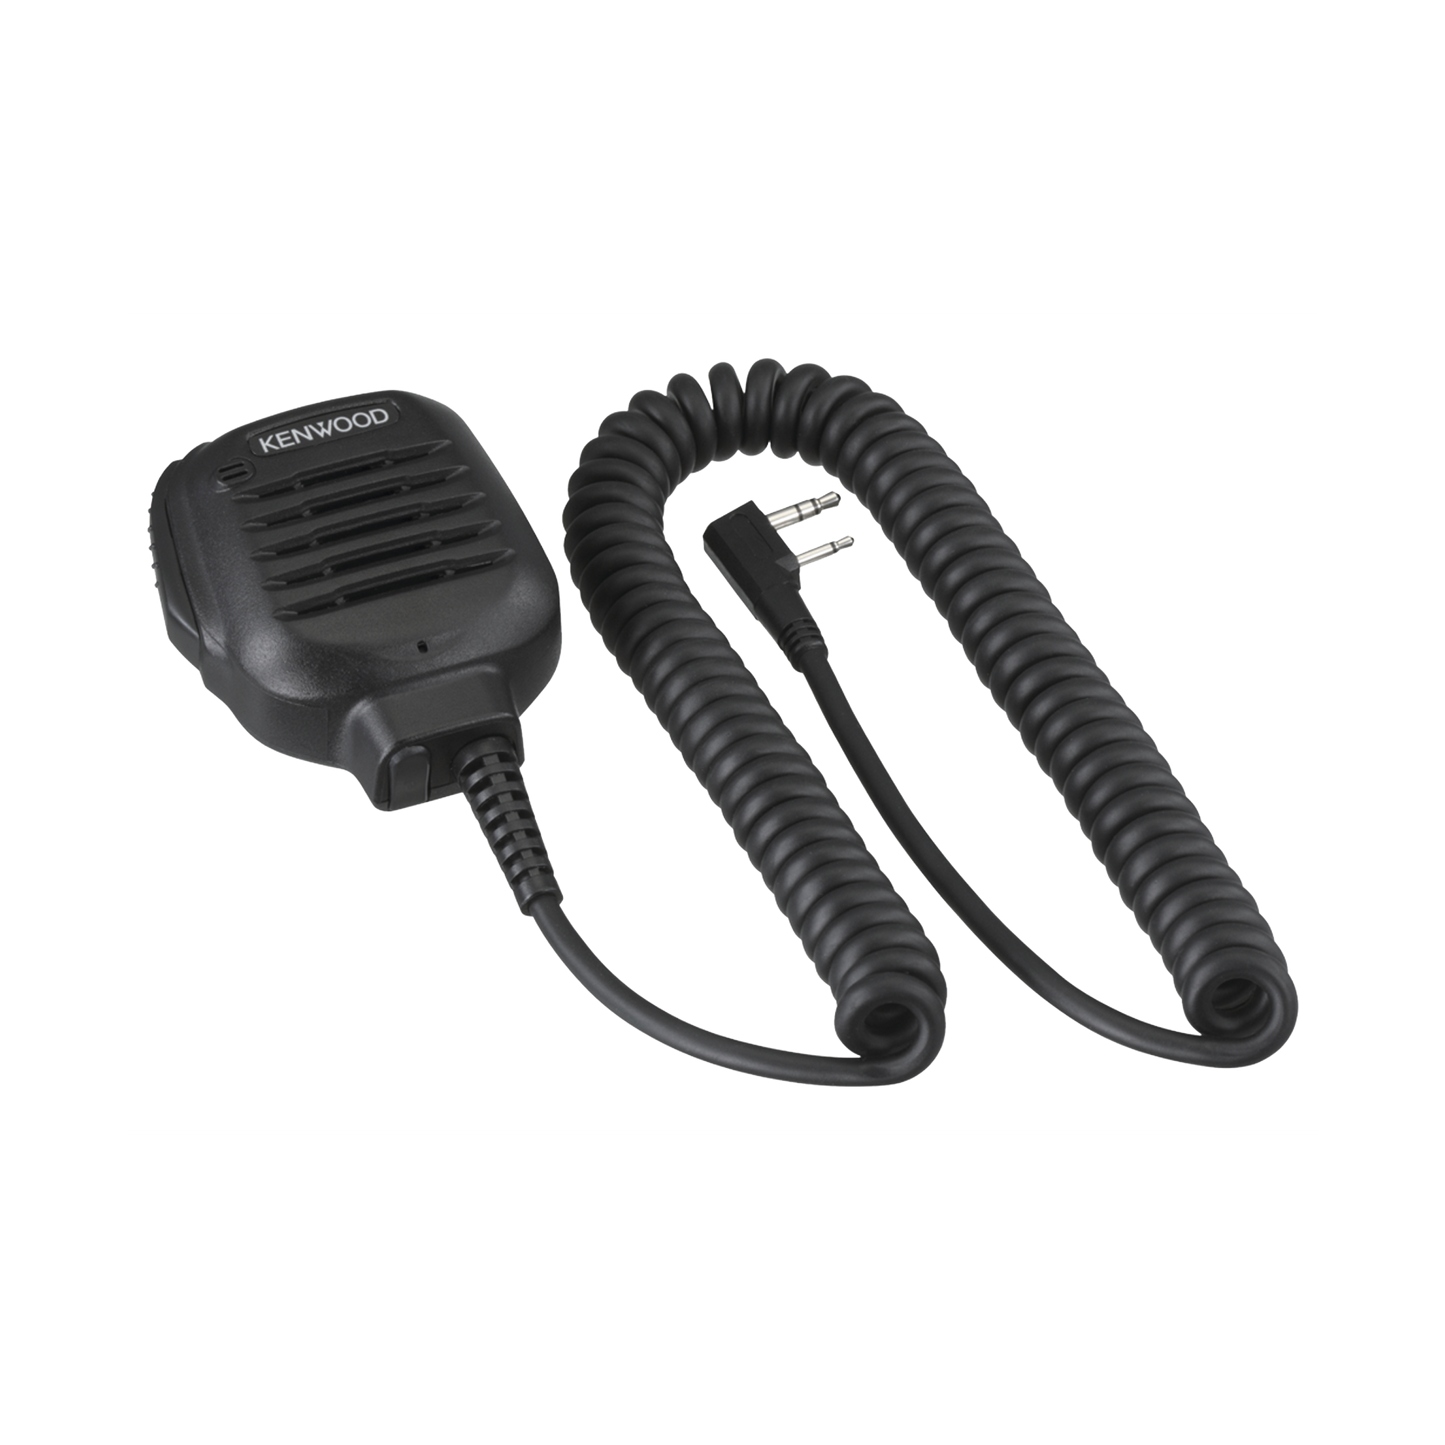 Heavy Duty Speaker-Microphone MIL-STD-810 for NX-1000/240/340/3220/3320, TK-2402/3402